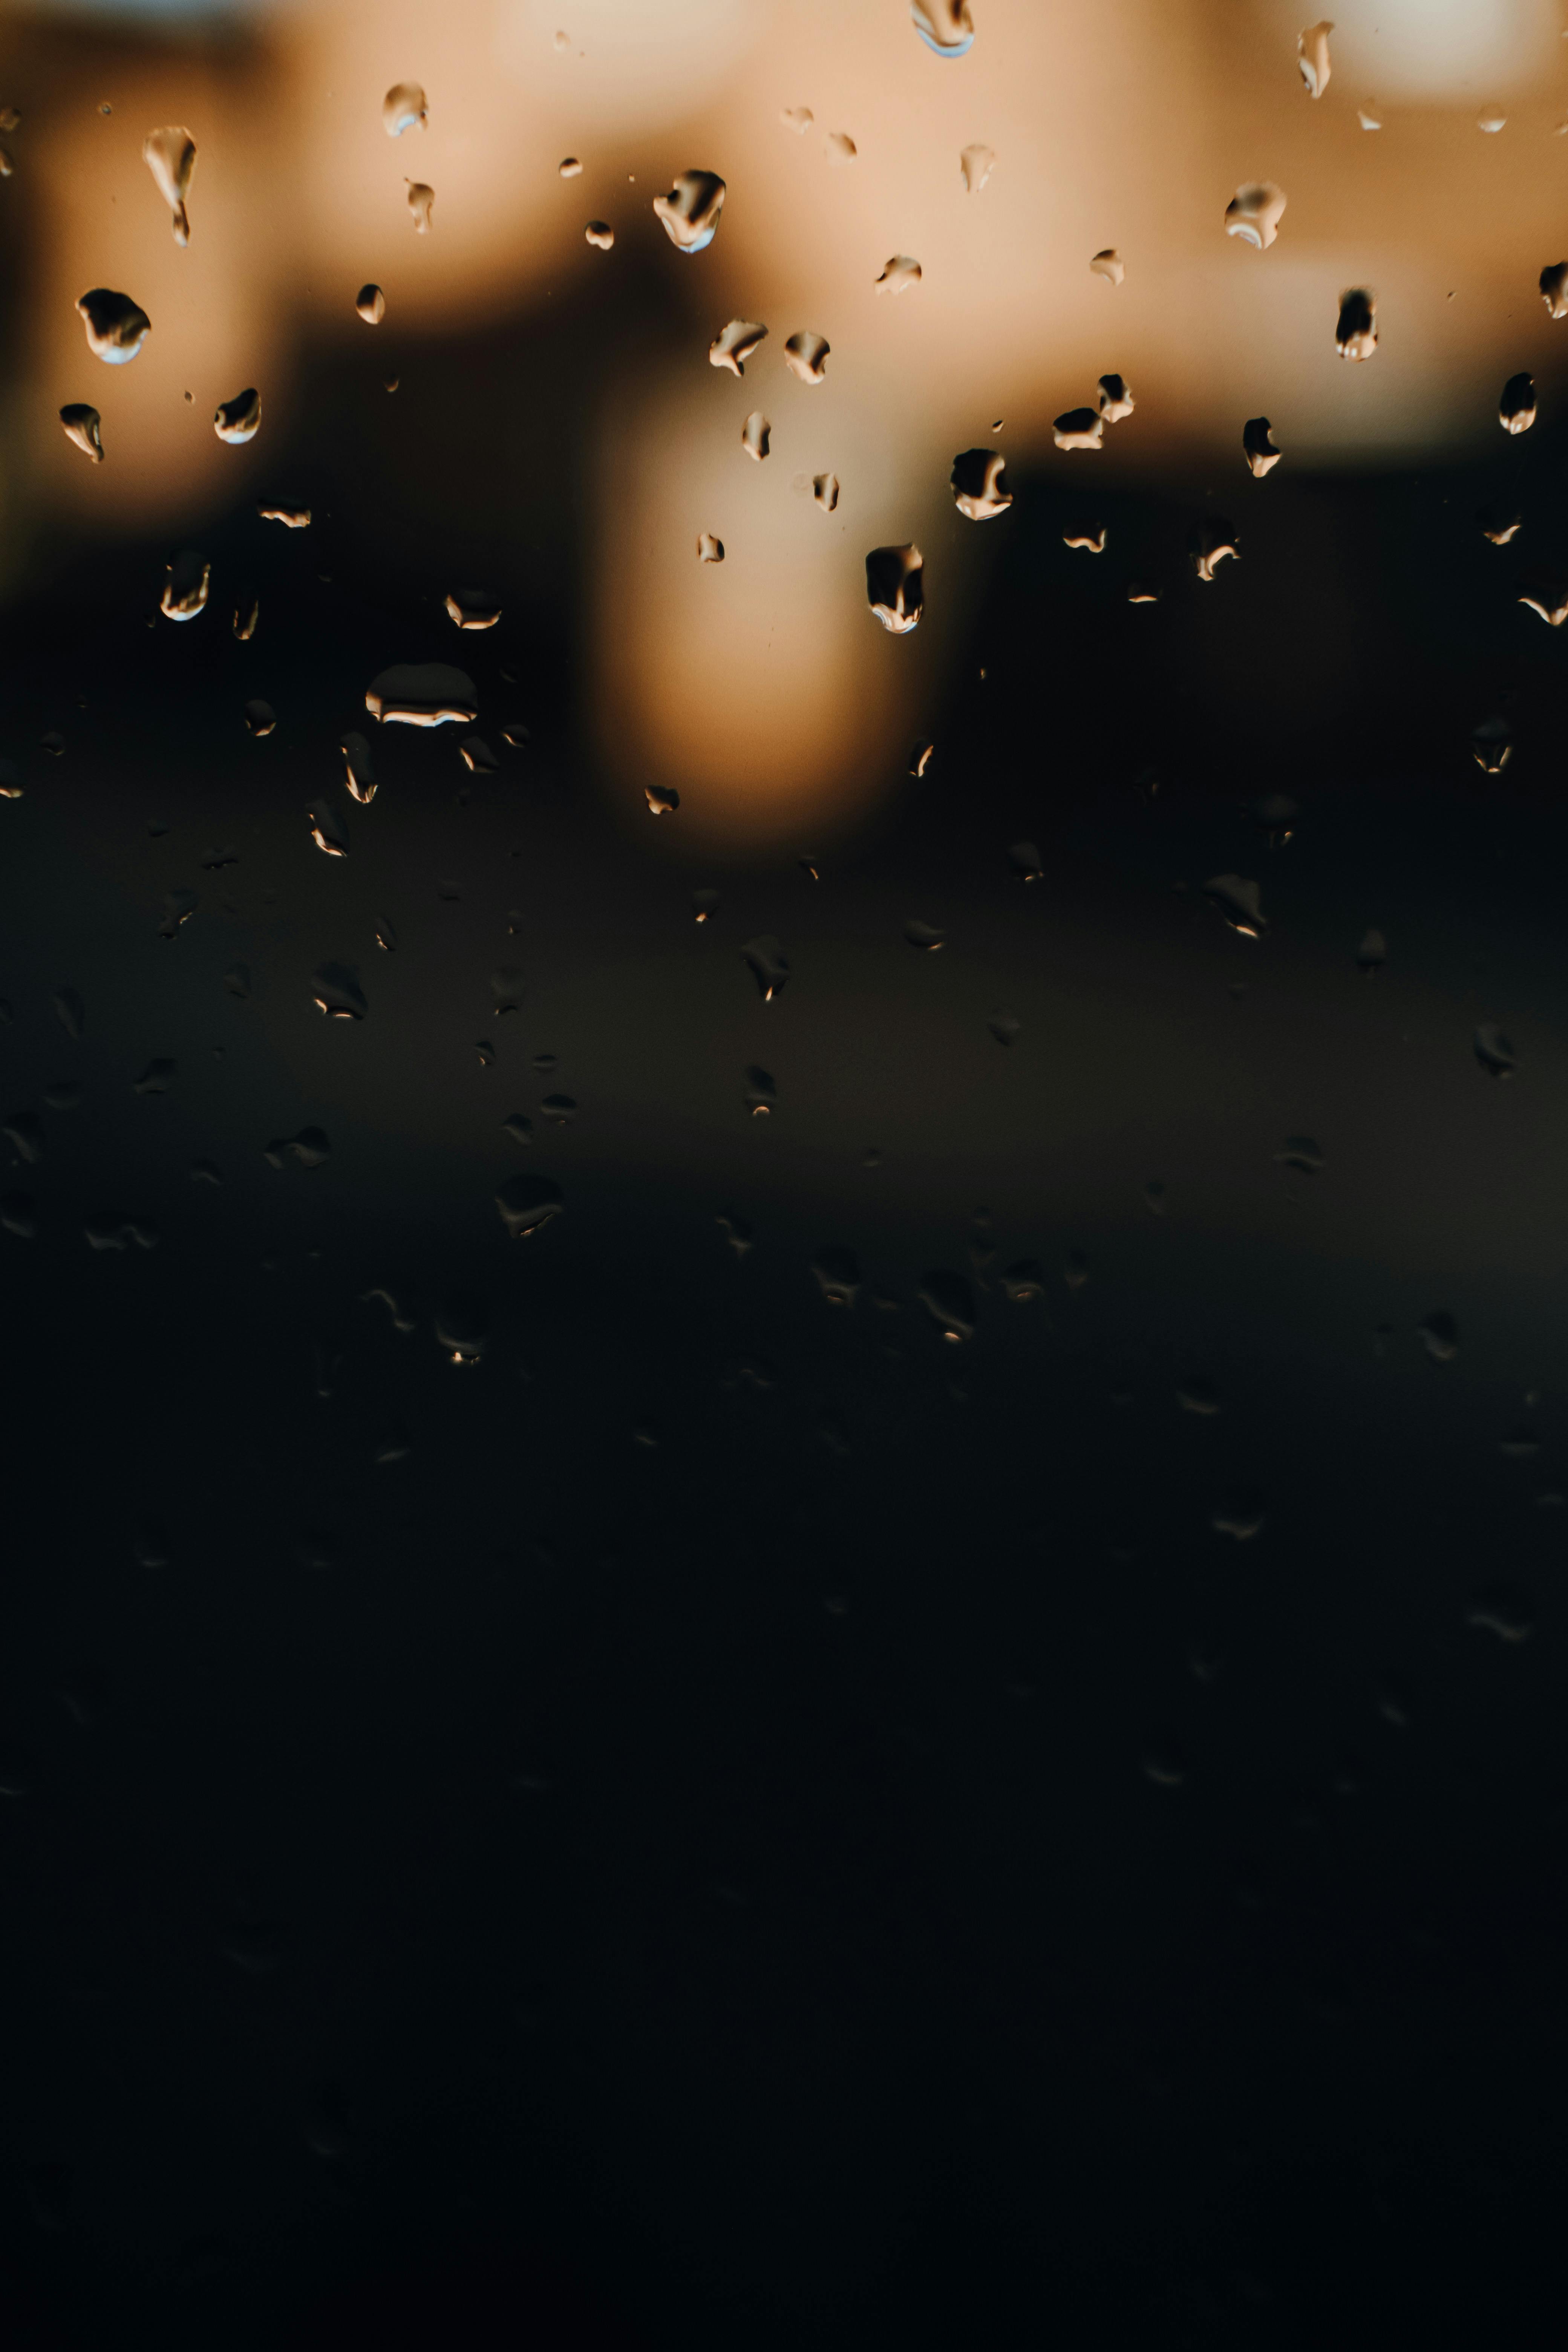 rain drops on glass window in evening